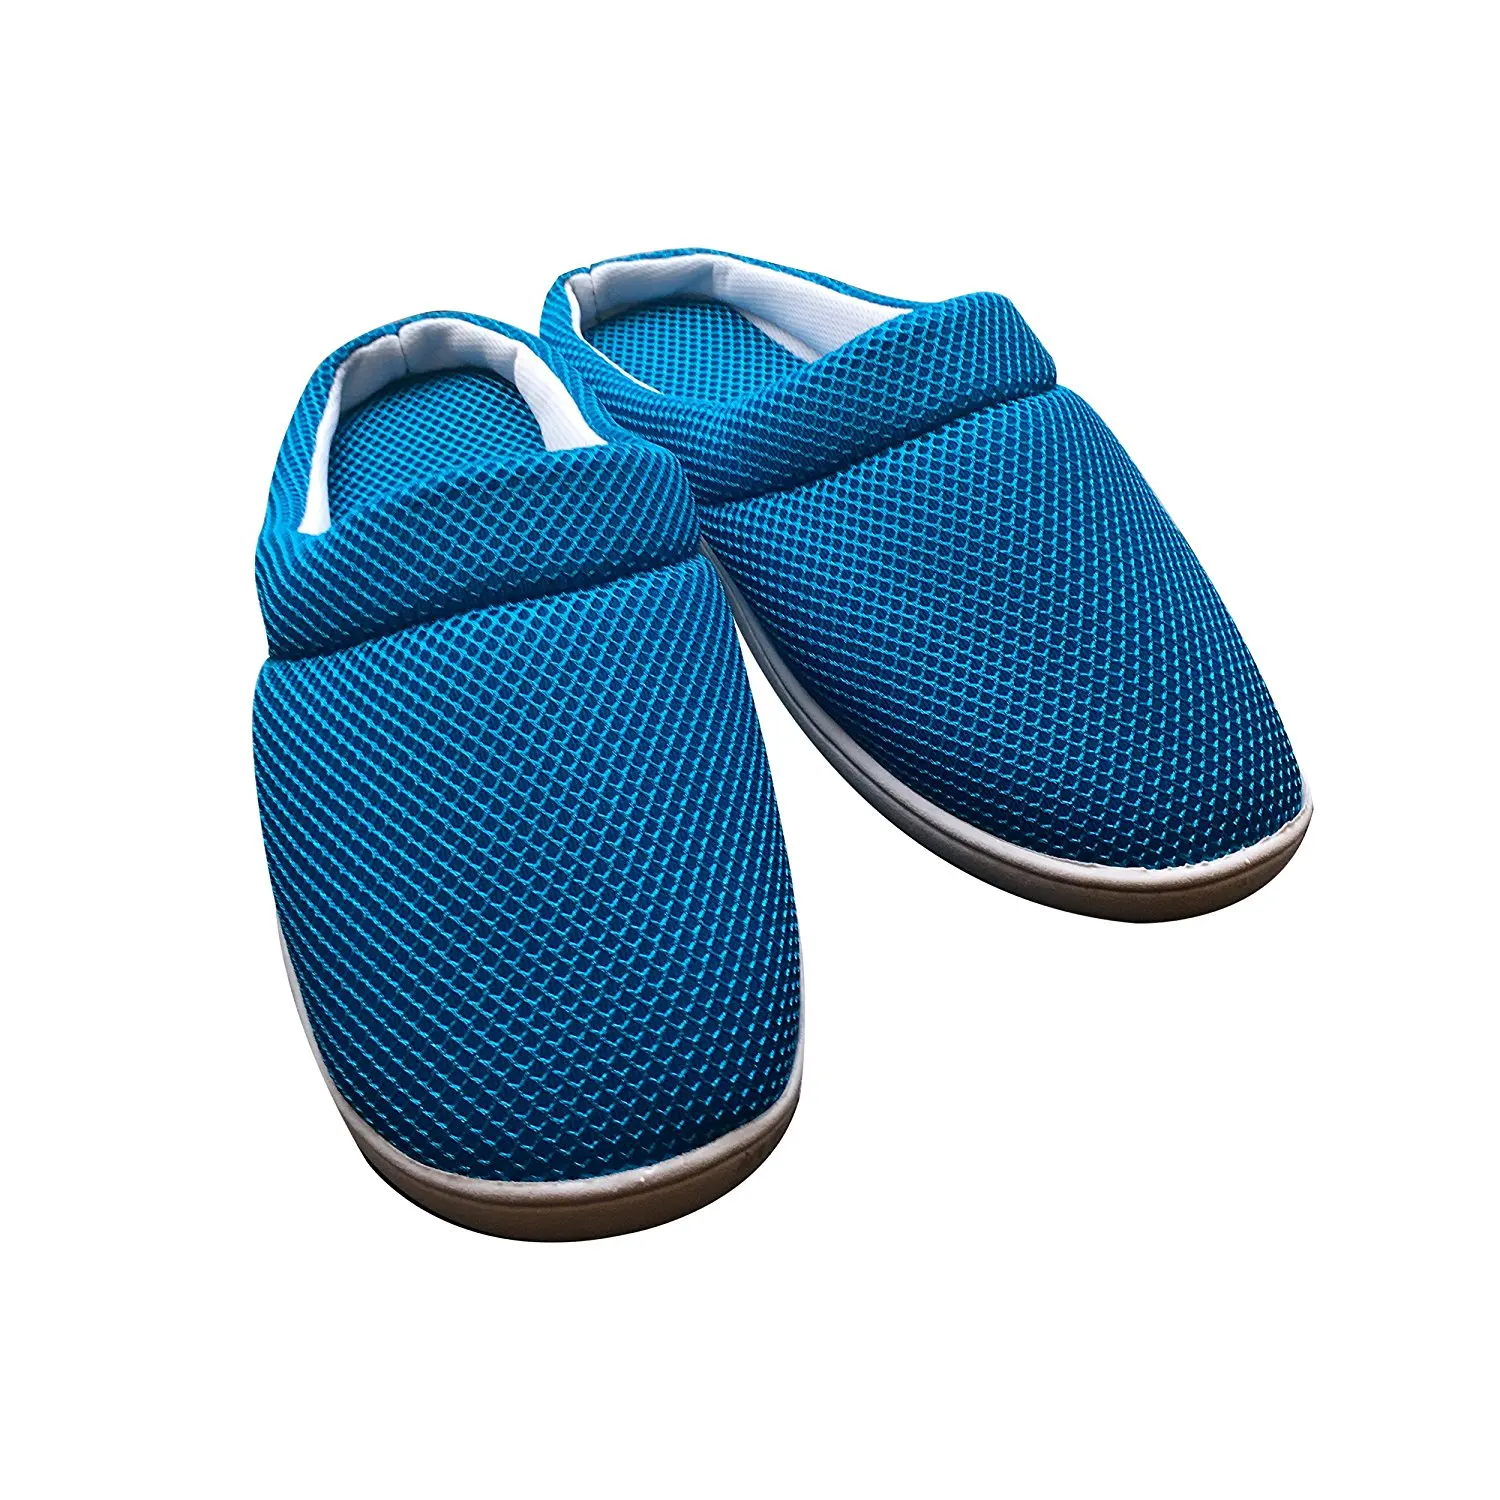 comfort pedic slippers